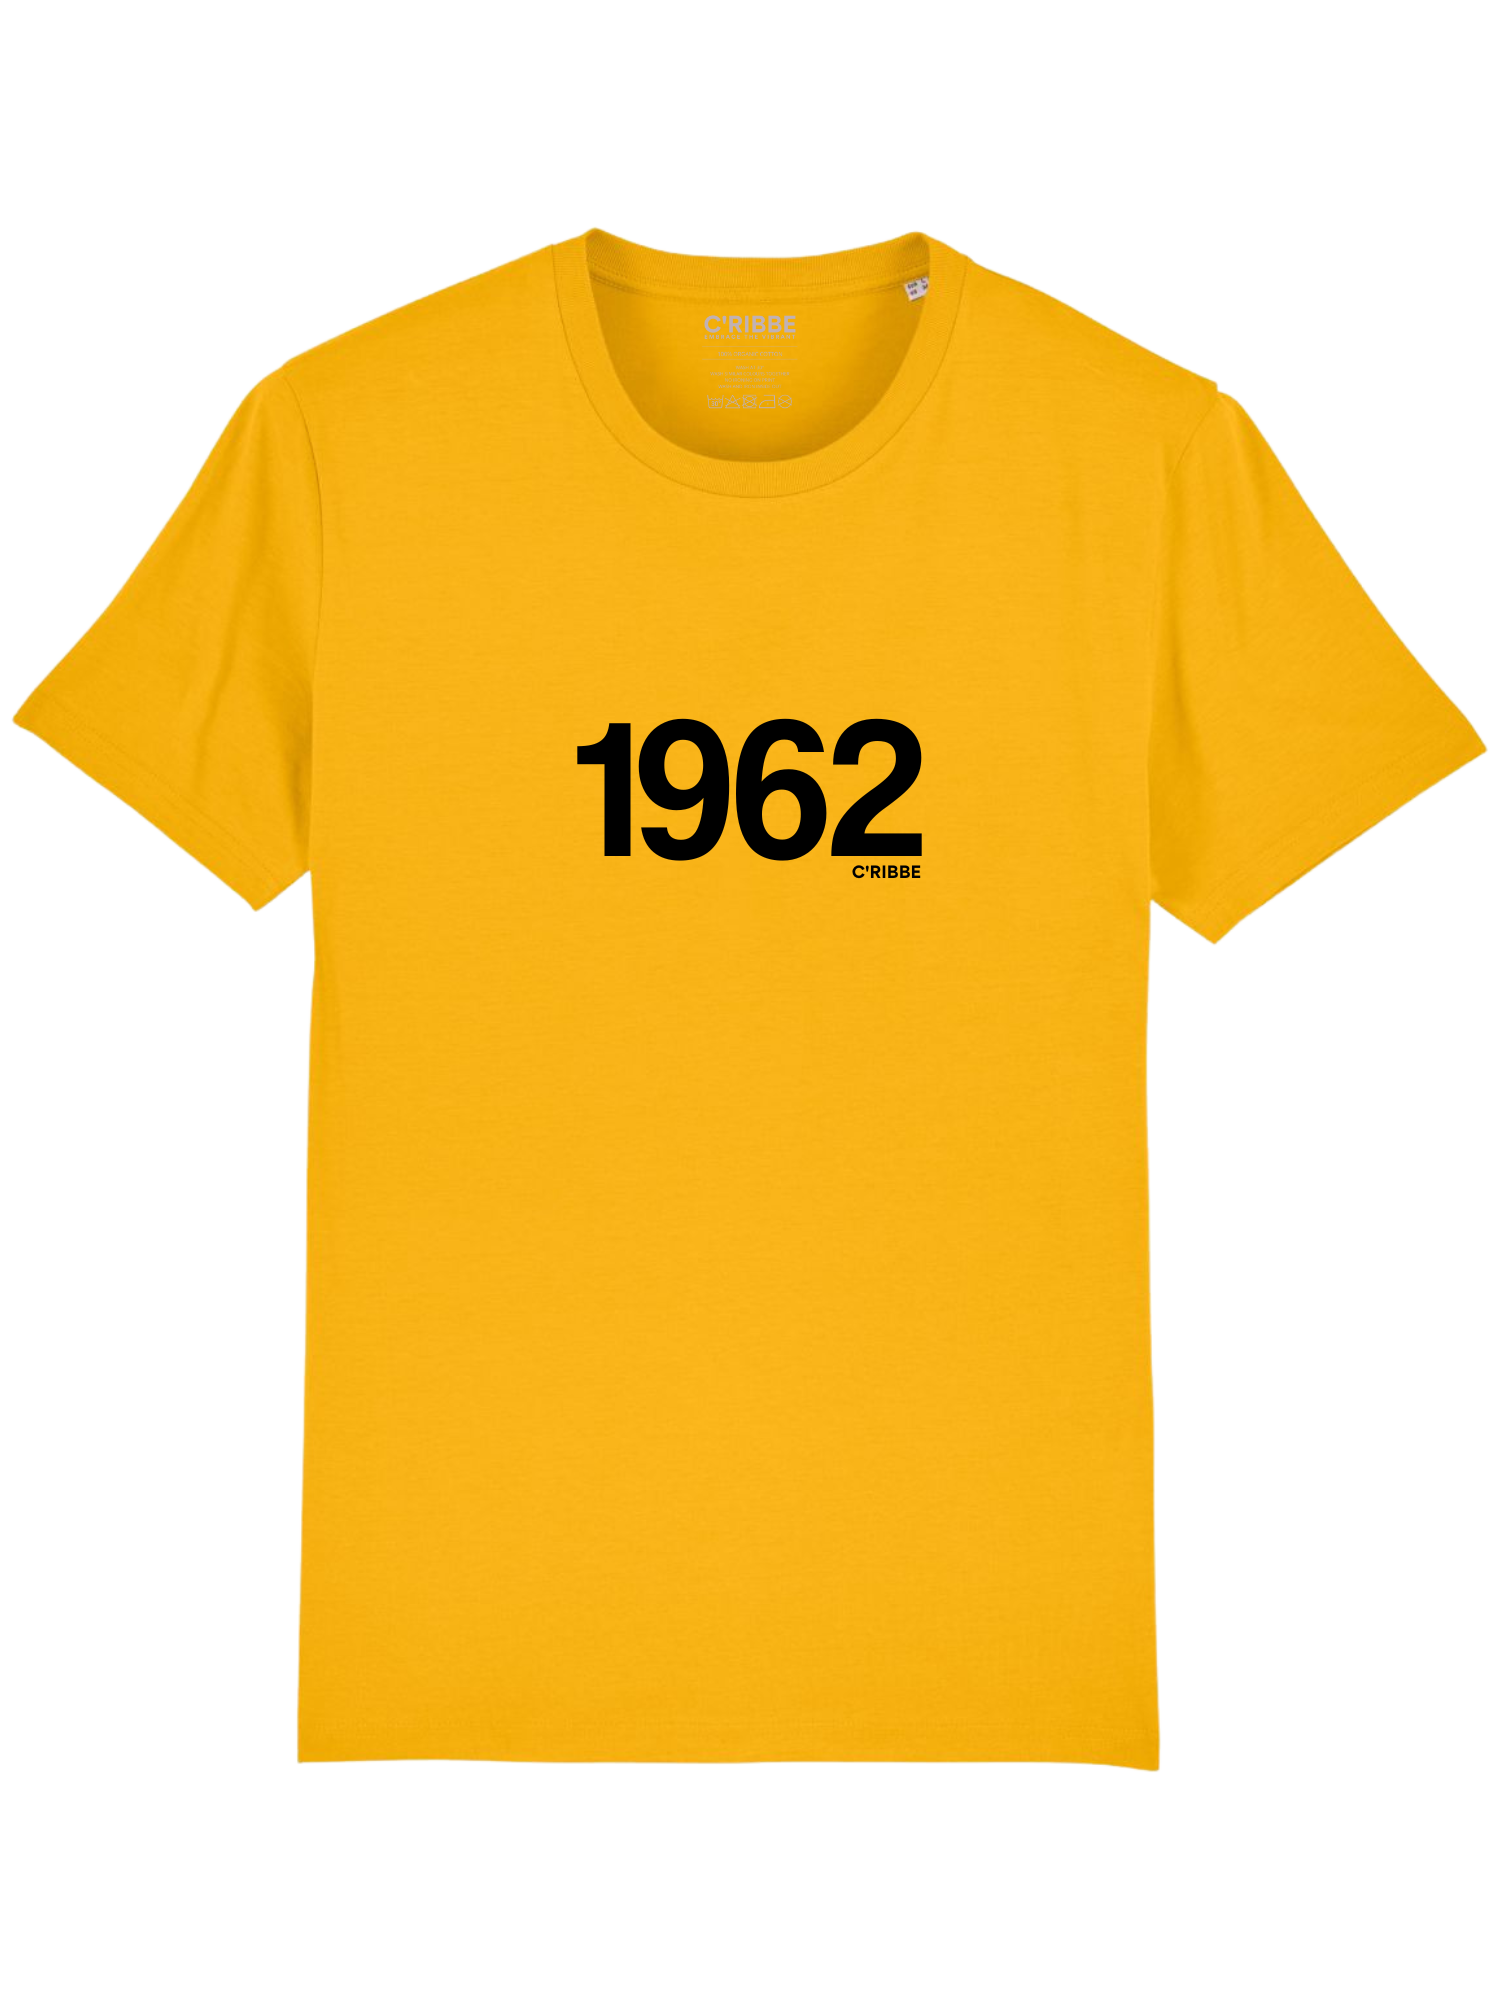 Jamaica Independence 1962 Unisex Crew Neck T-Shirt, Black